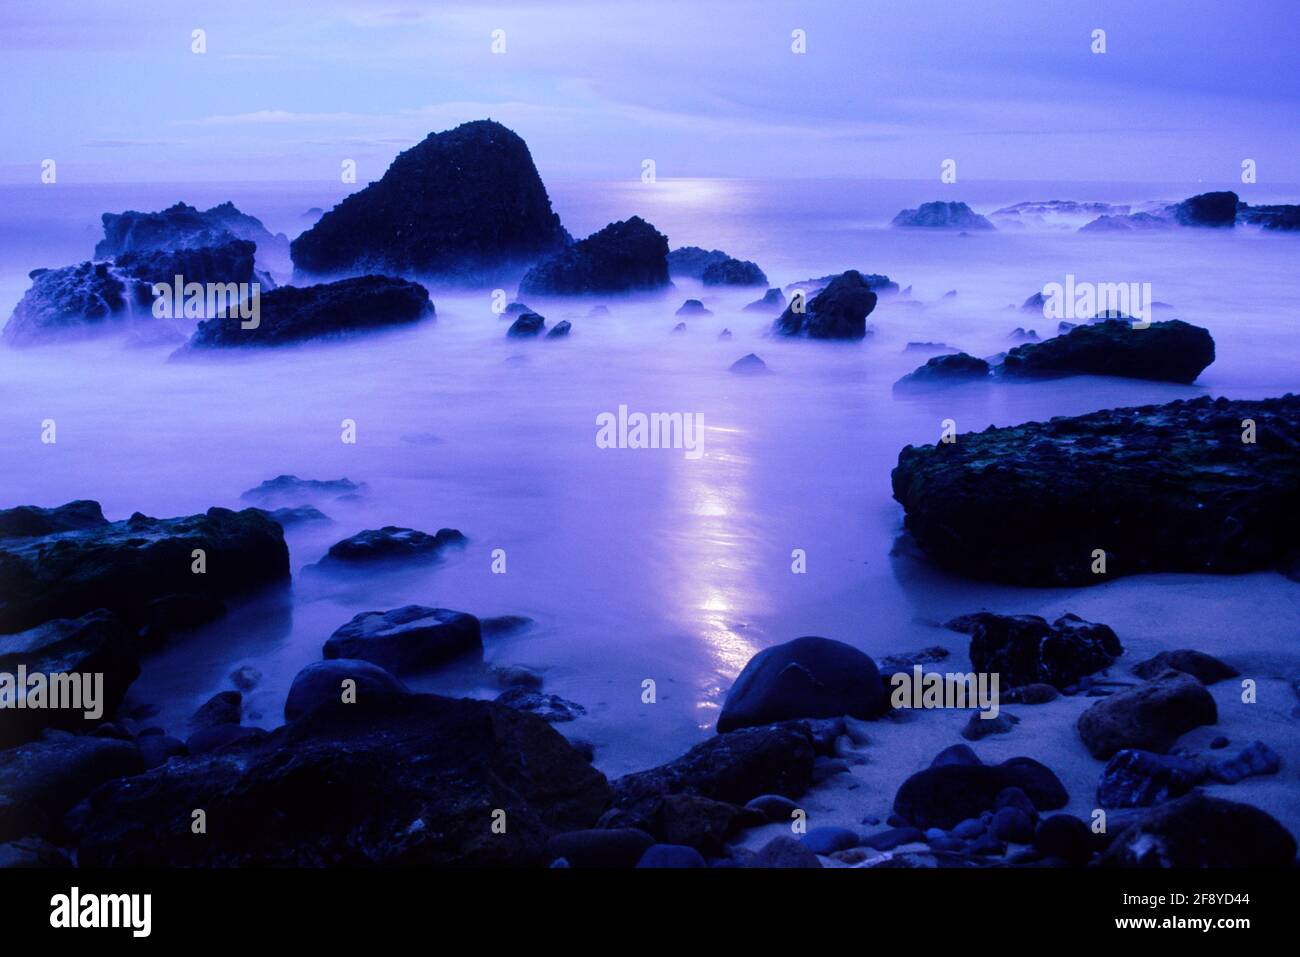 Scenic view of rocky coast at night, Laguna Beach, California, USA Stock Photo